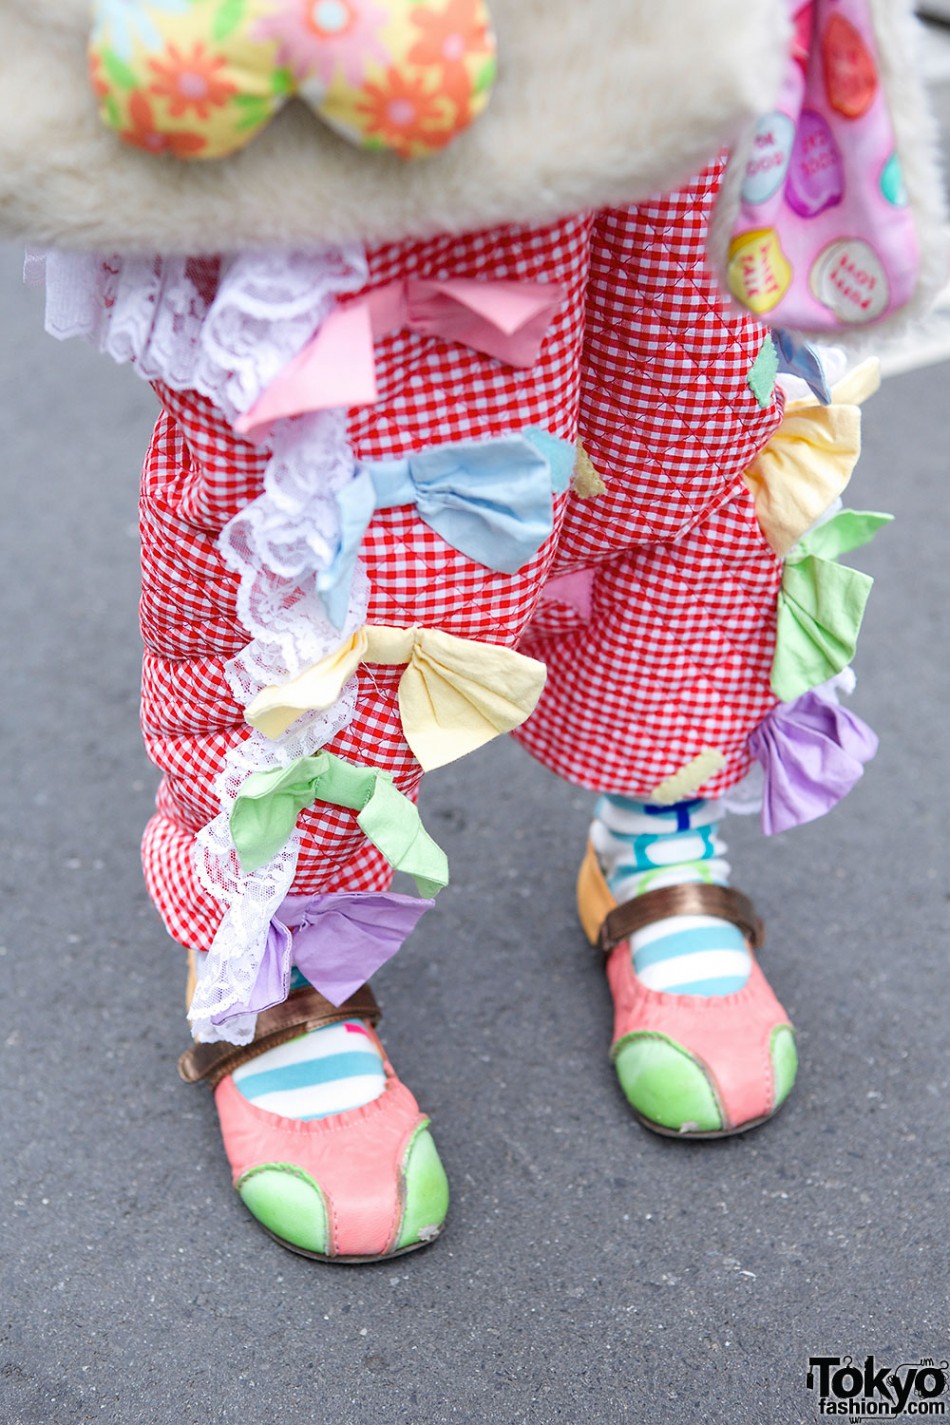 Cute Harajuku Girl with Colorful Coat, Bows & Animal Purse – Tokyo Fashion